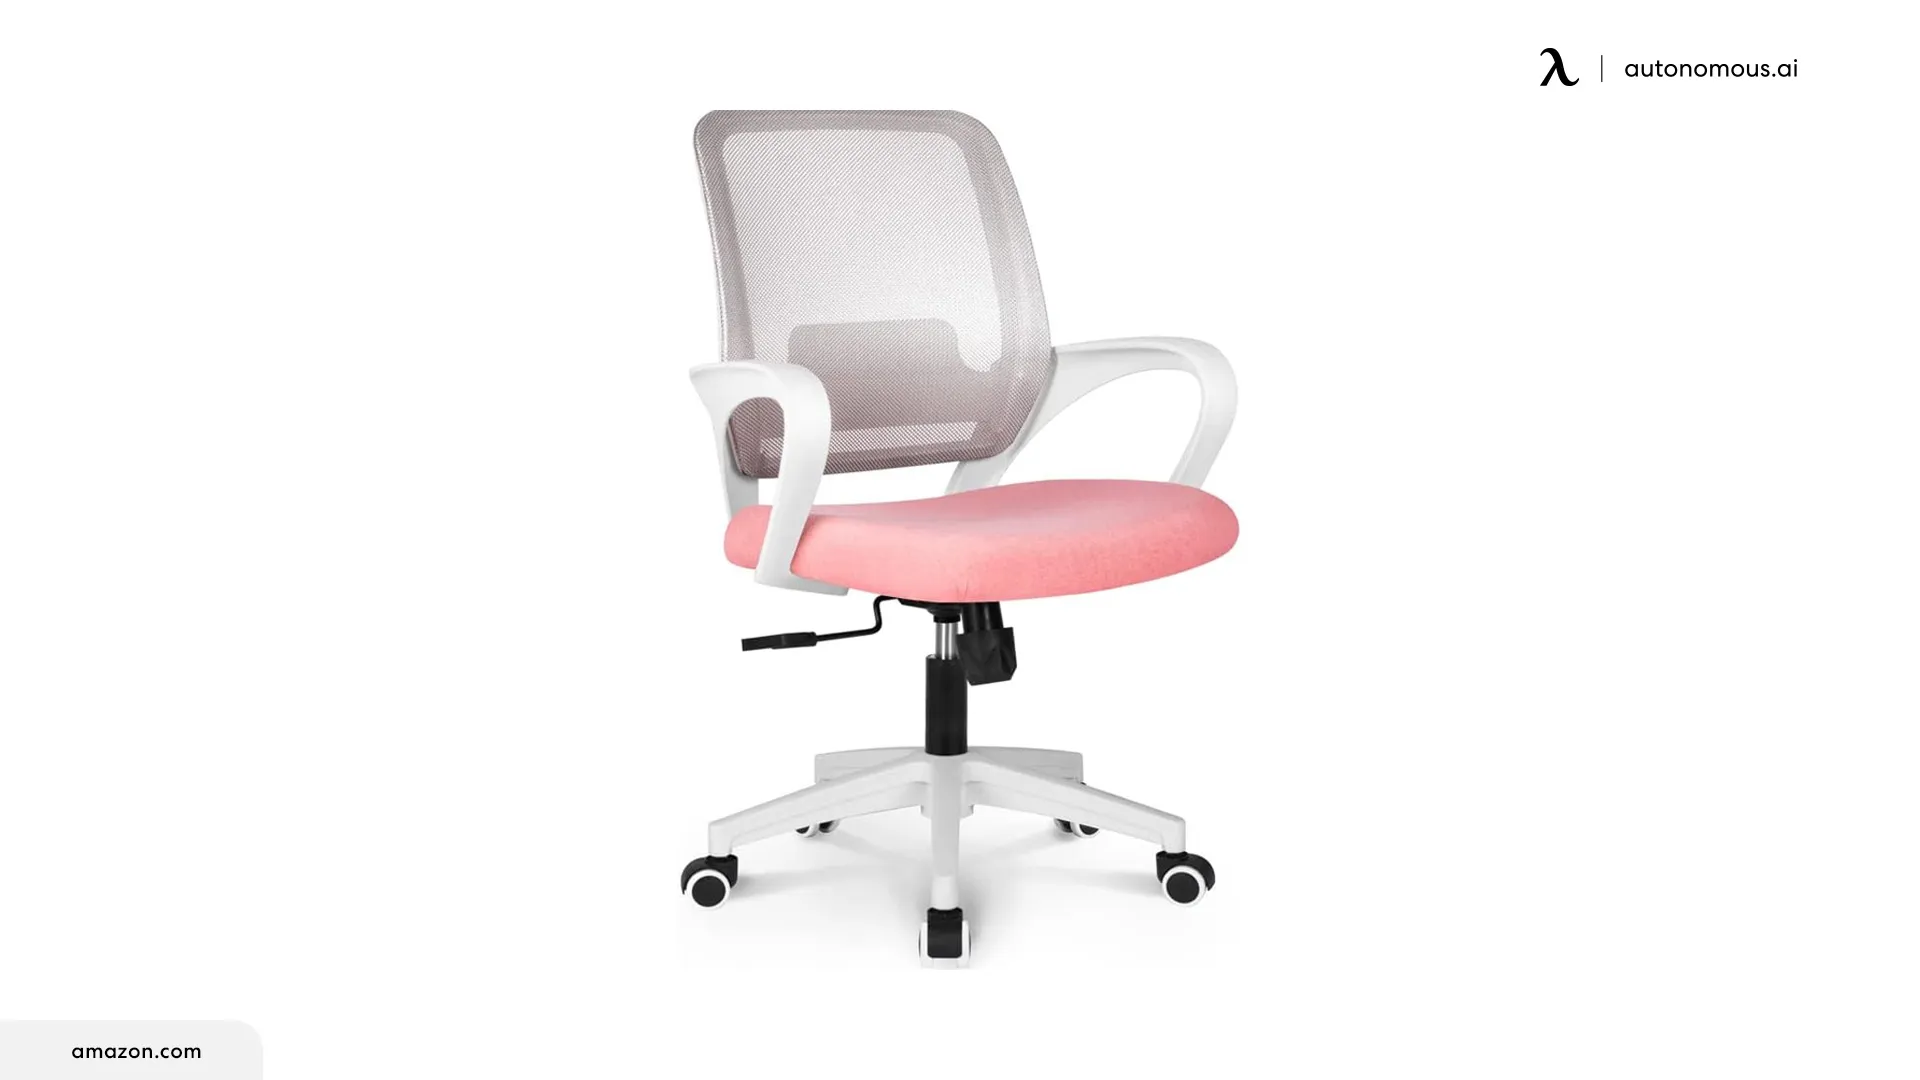 NEO CHAIR Office Chair Ergonomic Desk Chair